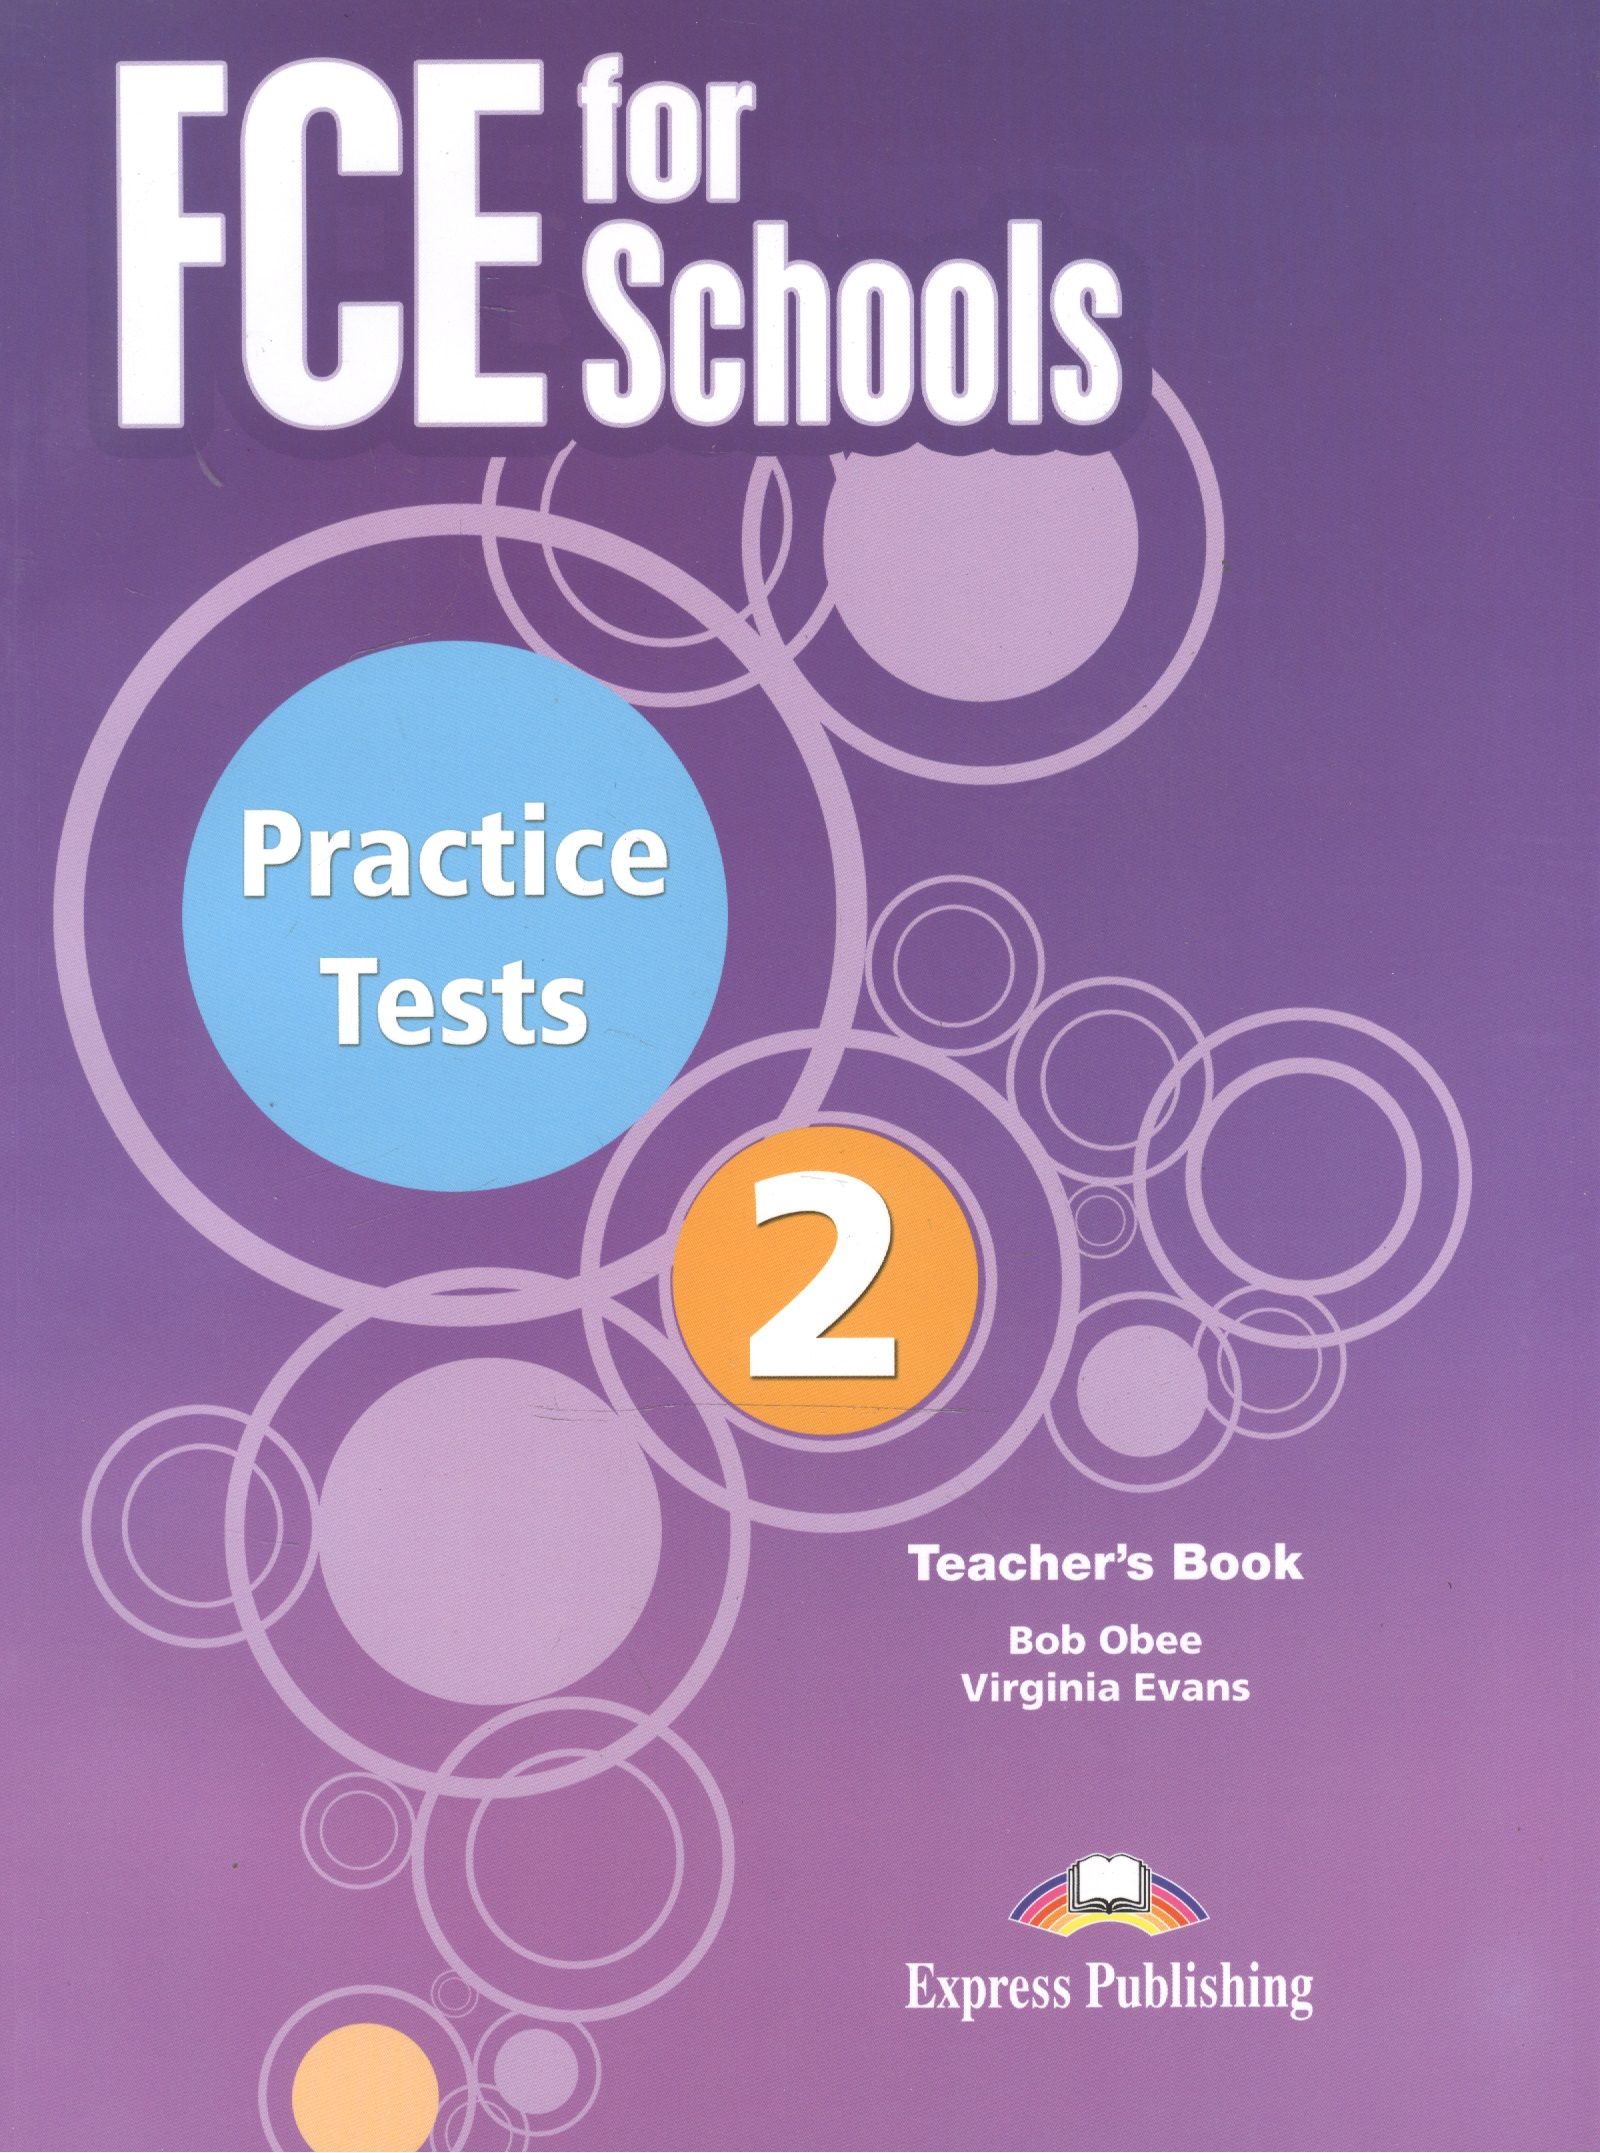 Test for teachers. FCE for Schools Practice Tests. Книга Pet. Pet Practice Tests. FCE Practice book.